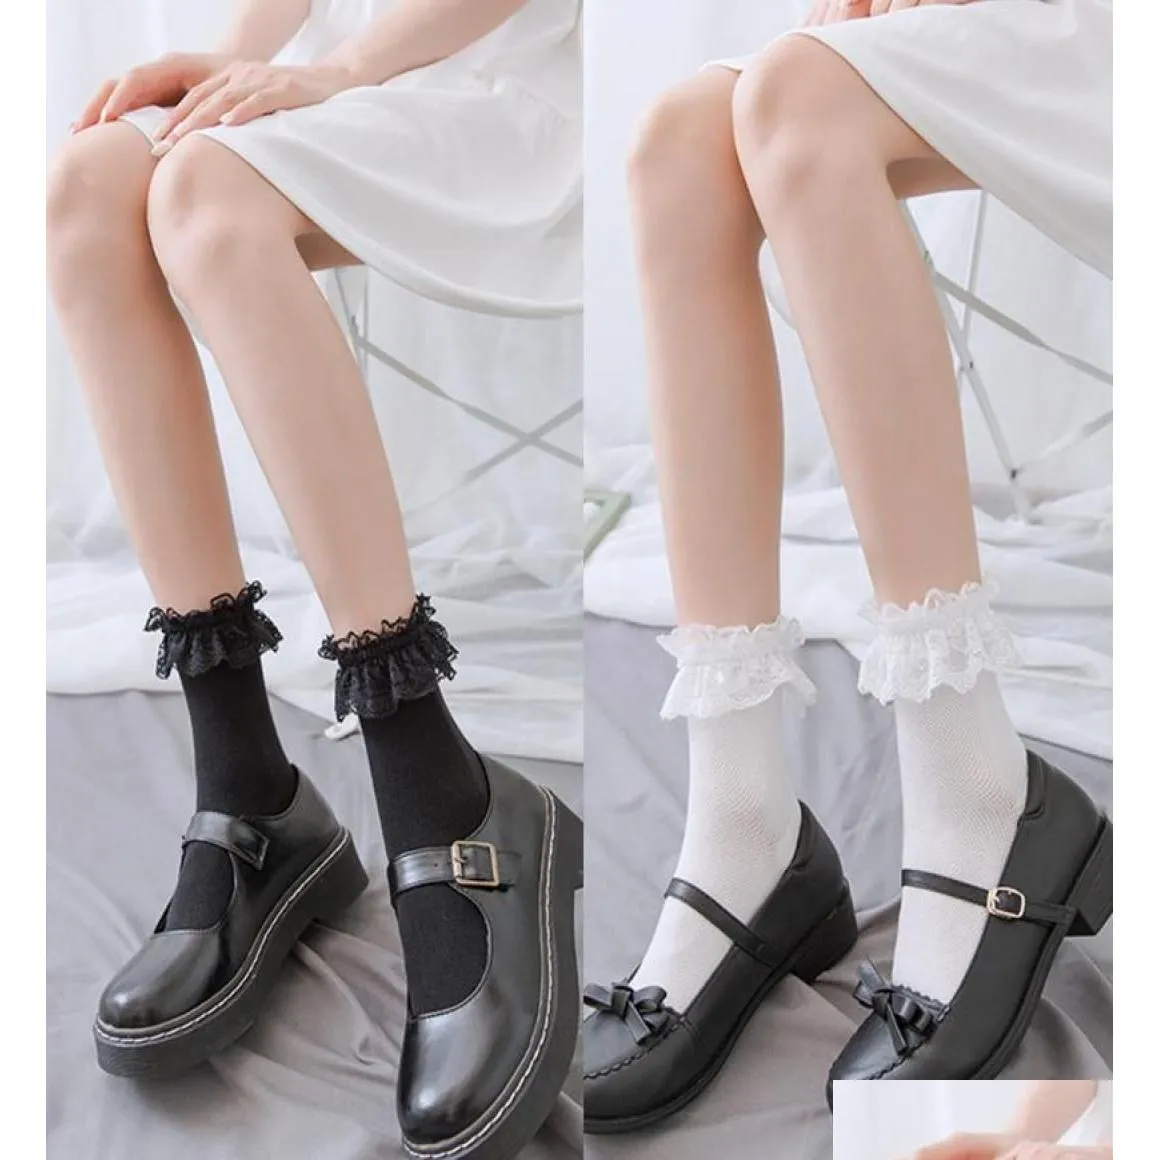 Socks Japanese Lolita Style Lovely Mesh Short Crew Harajuku Sweet Ruffled Lace Frilly Hollow Retro Cotton Mid Calf Hosiery